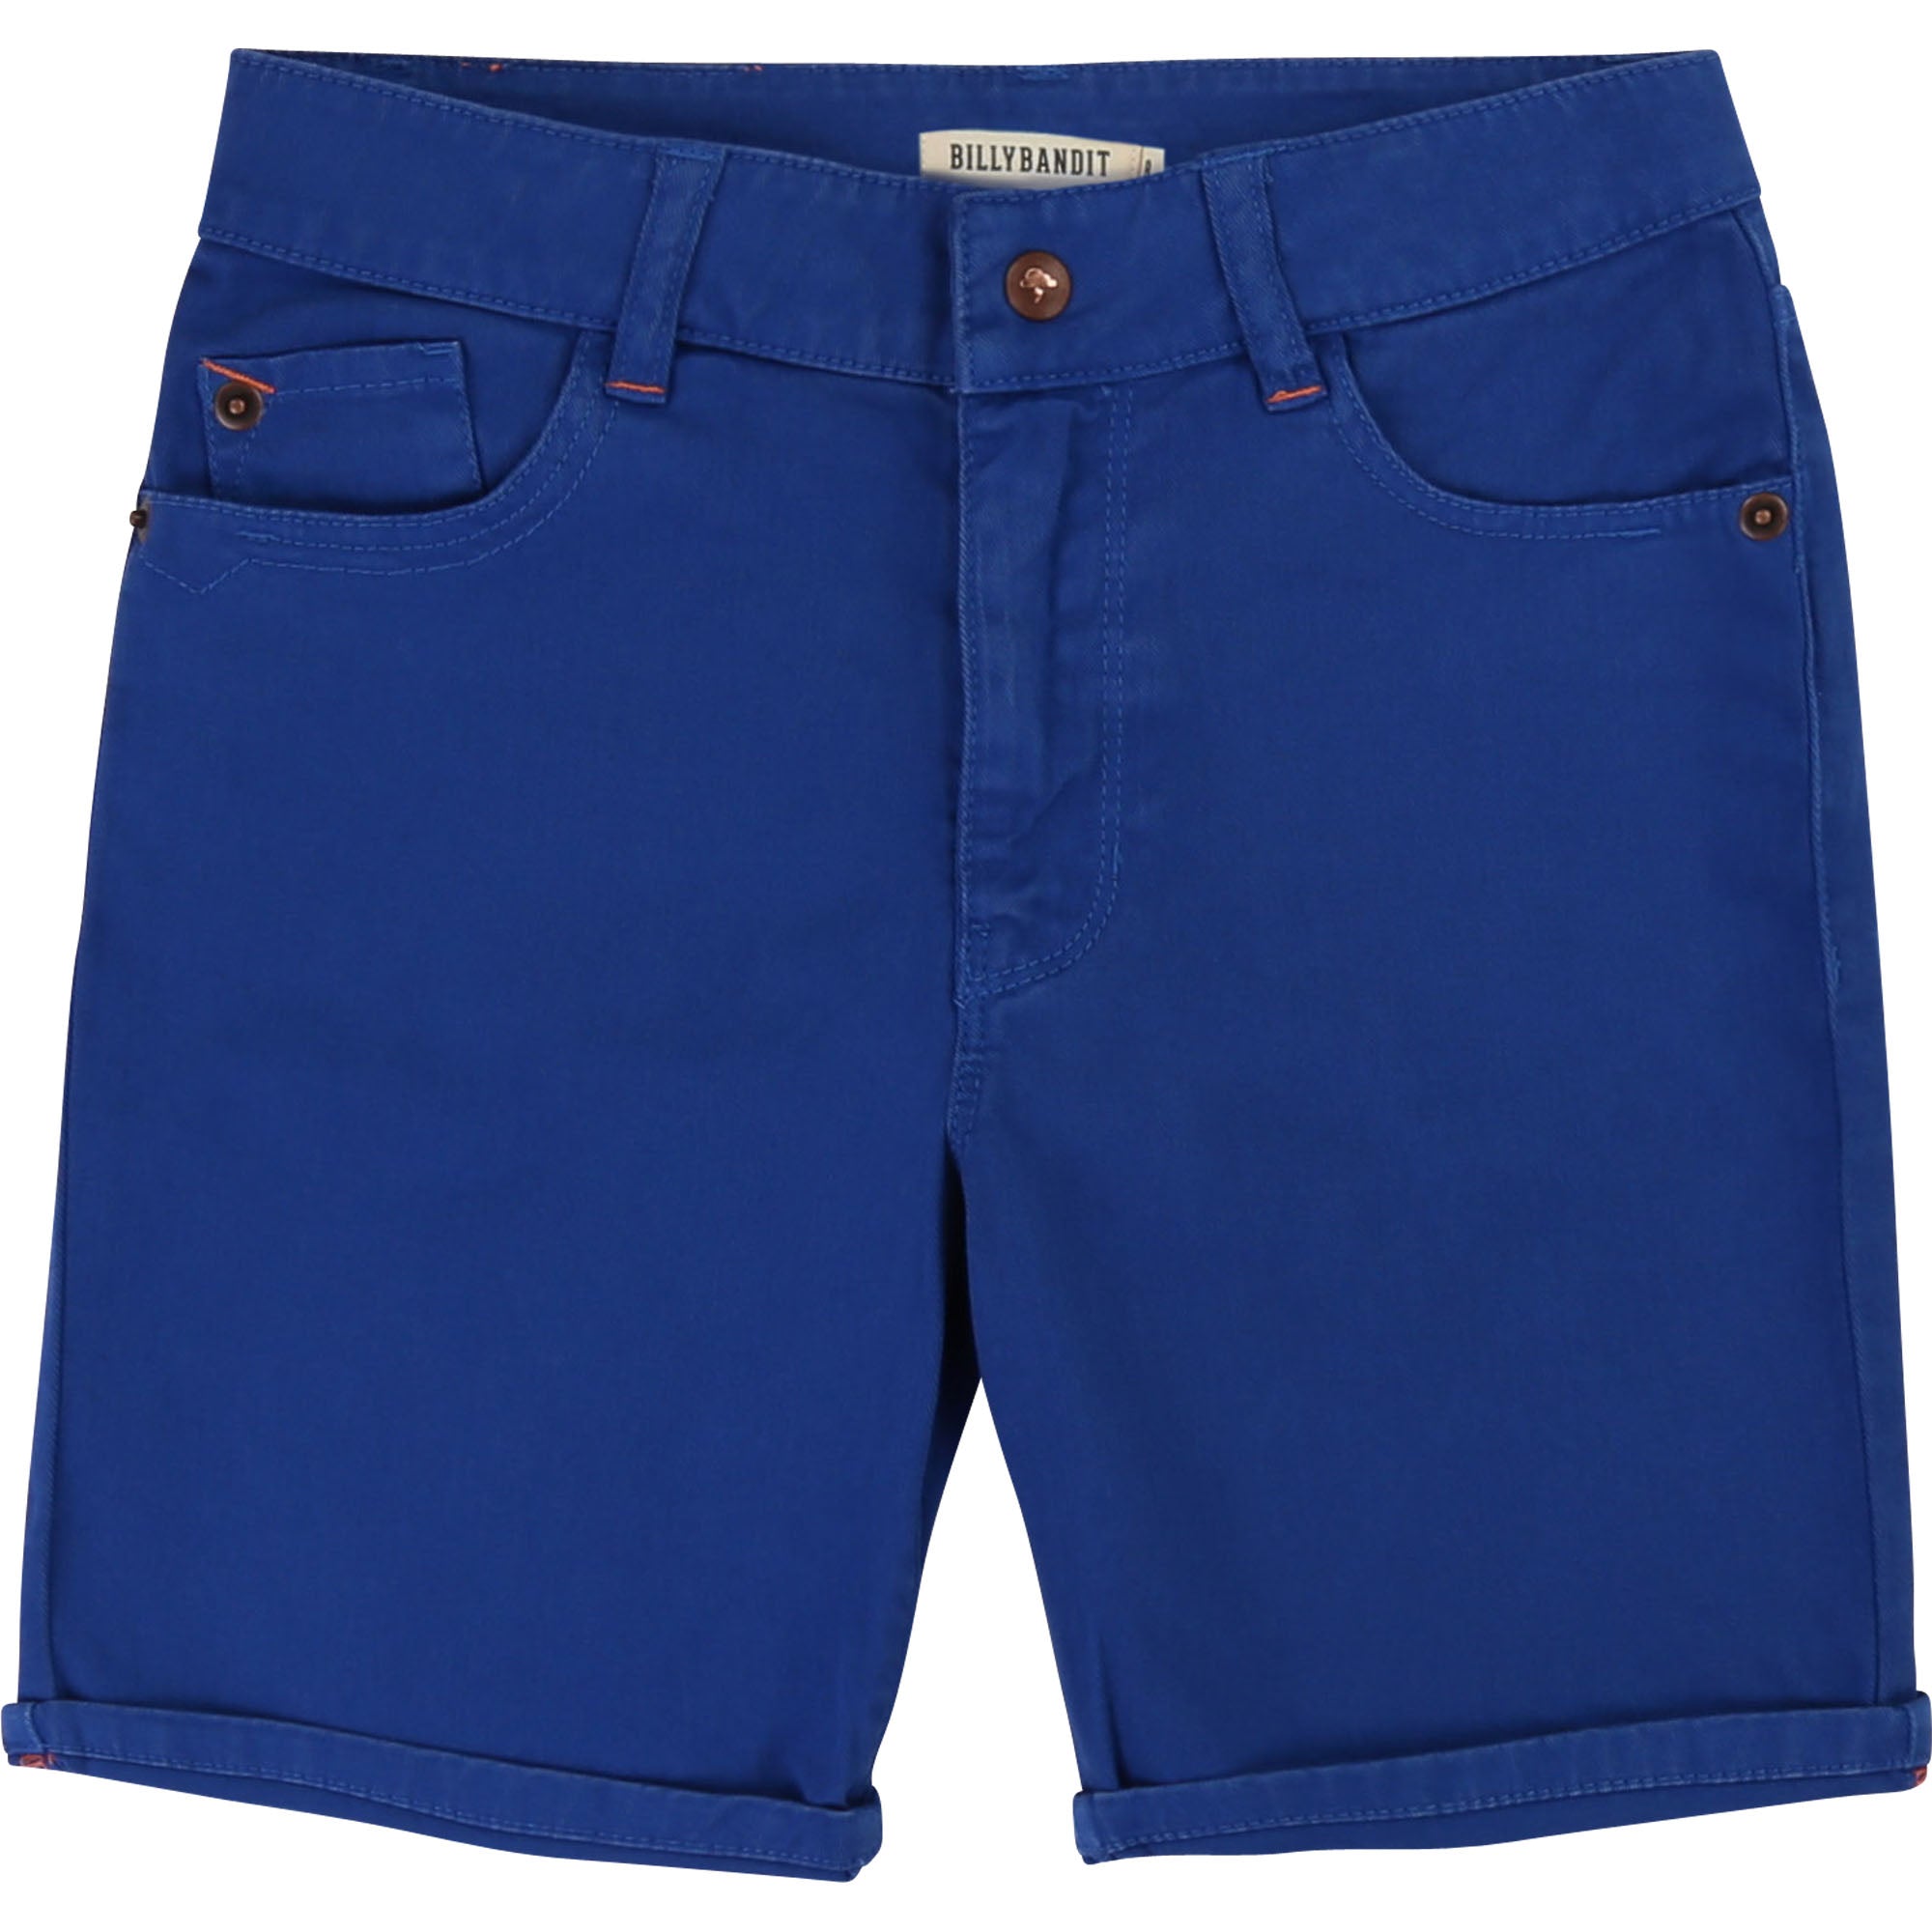 Boys Blue Cotton Shorts